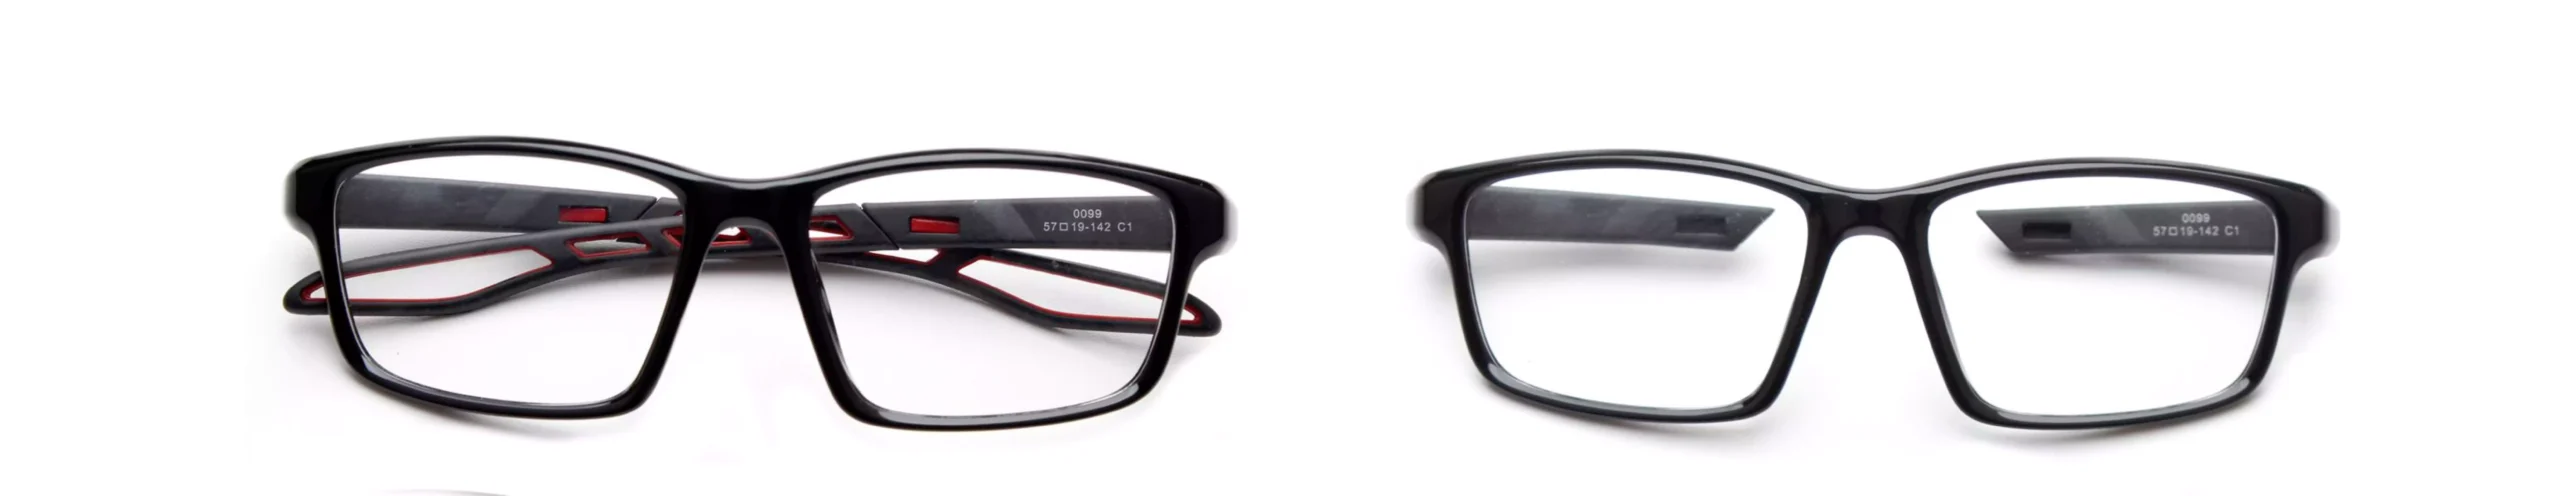 Eyeglasses Frame 0089 Before And After Assembly, rectangle, black, black/red temple,Skeleton Eyeglass Arms